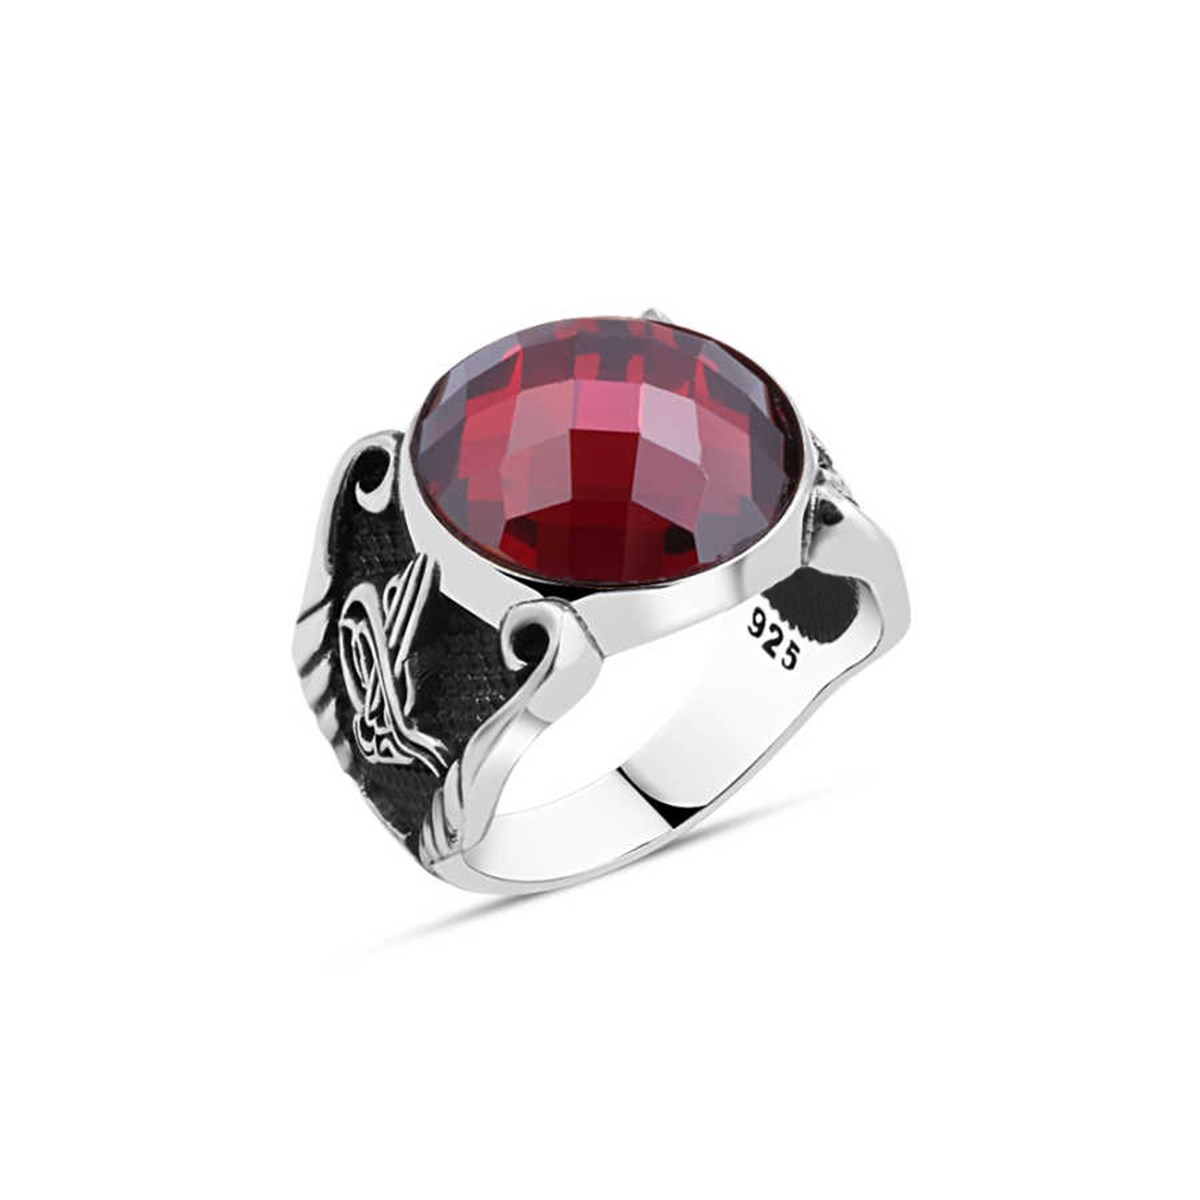 Cut Red Zircon Stone Sterling Silver Men's Ring